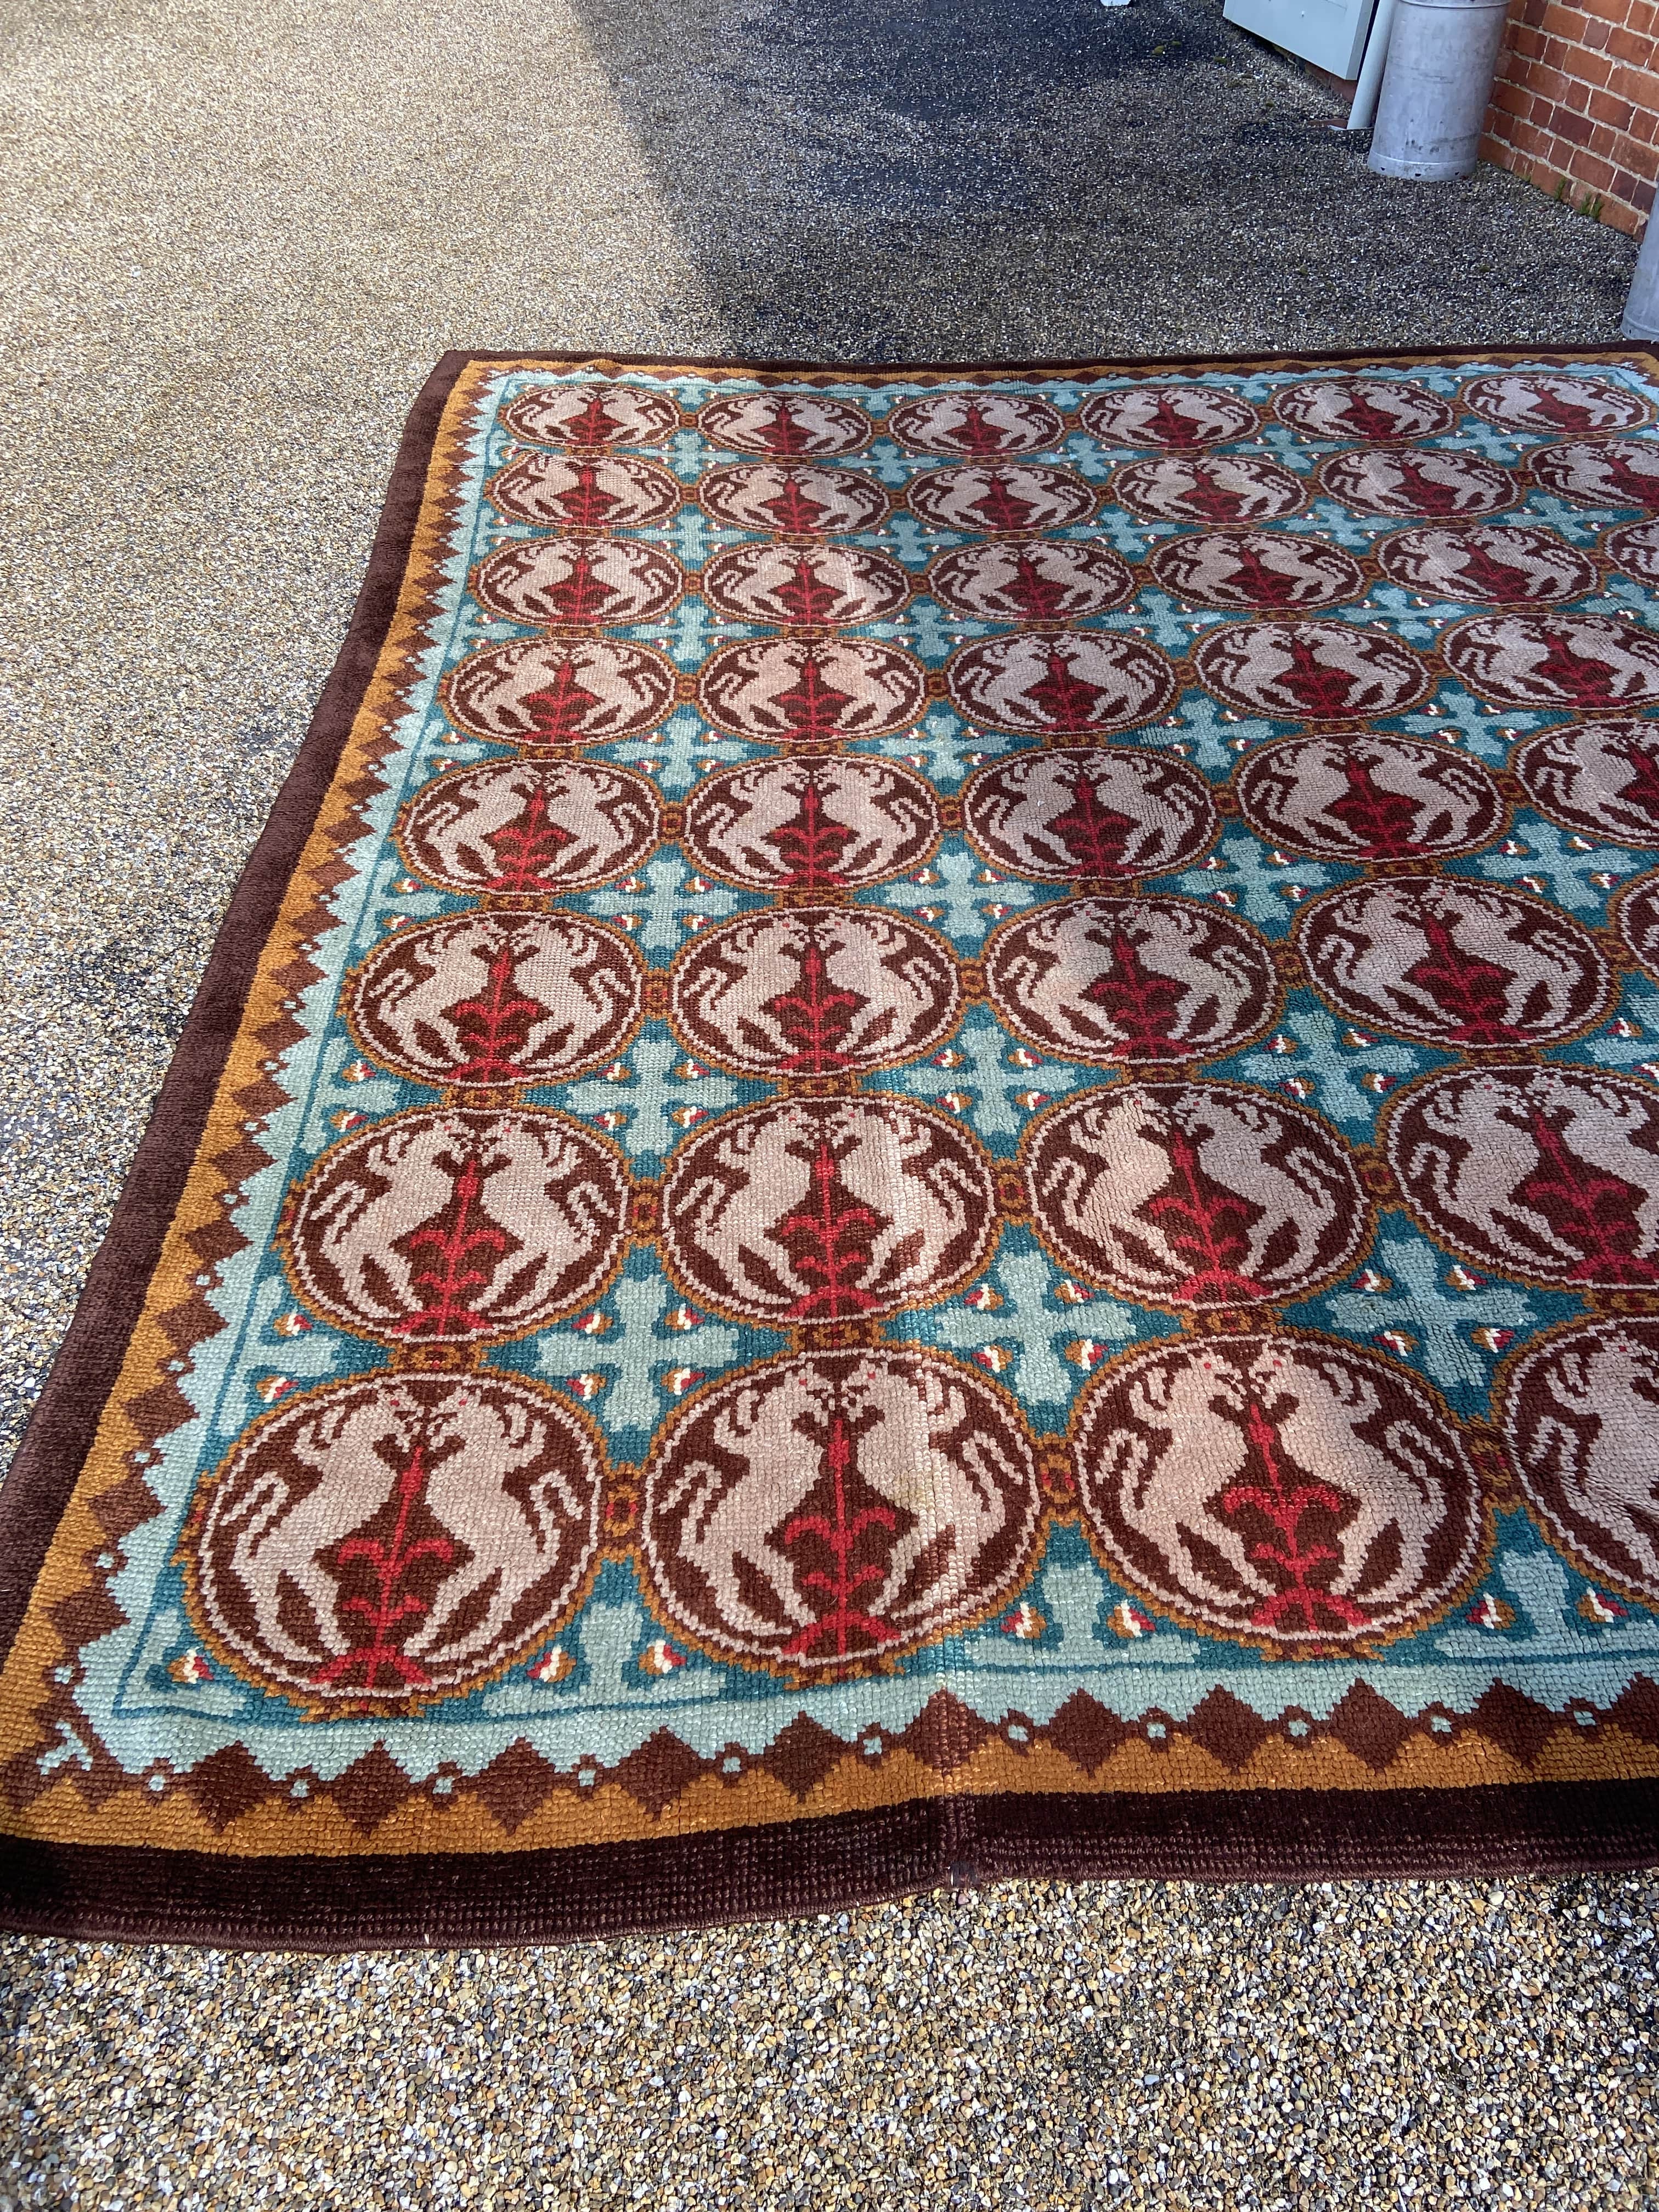 An English Arts and Crafts design carpet, circa 1930 - Image 9 of 11